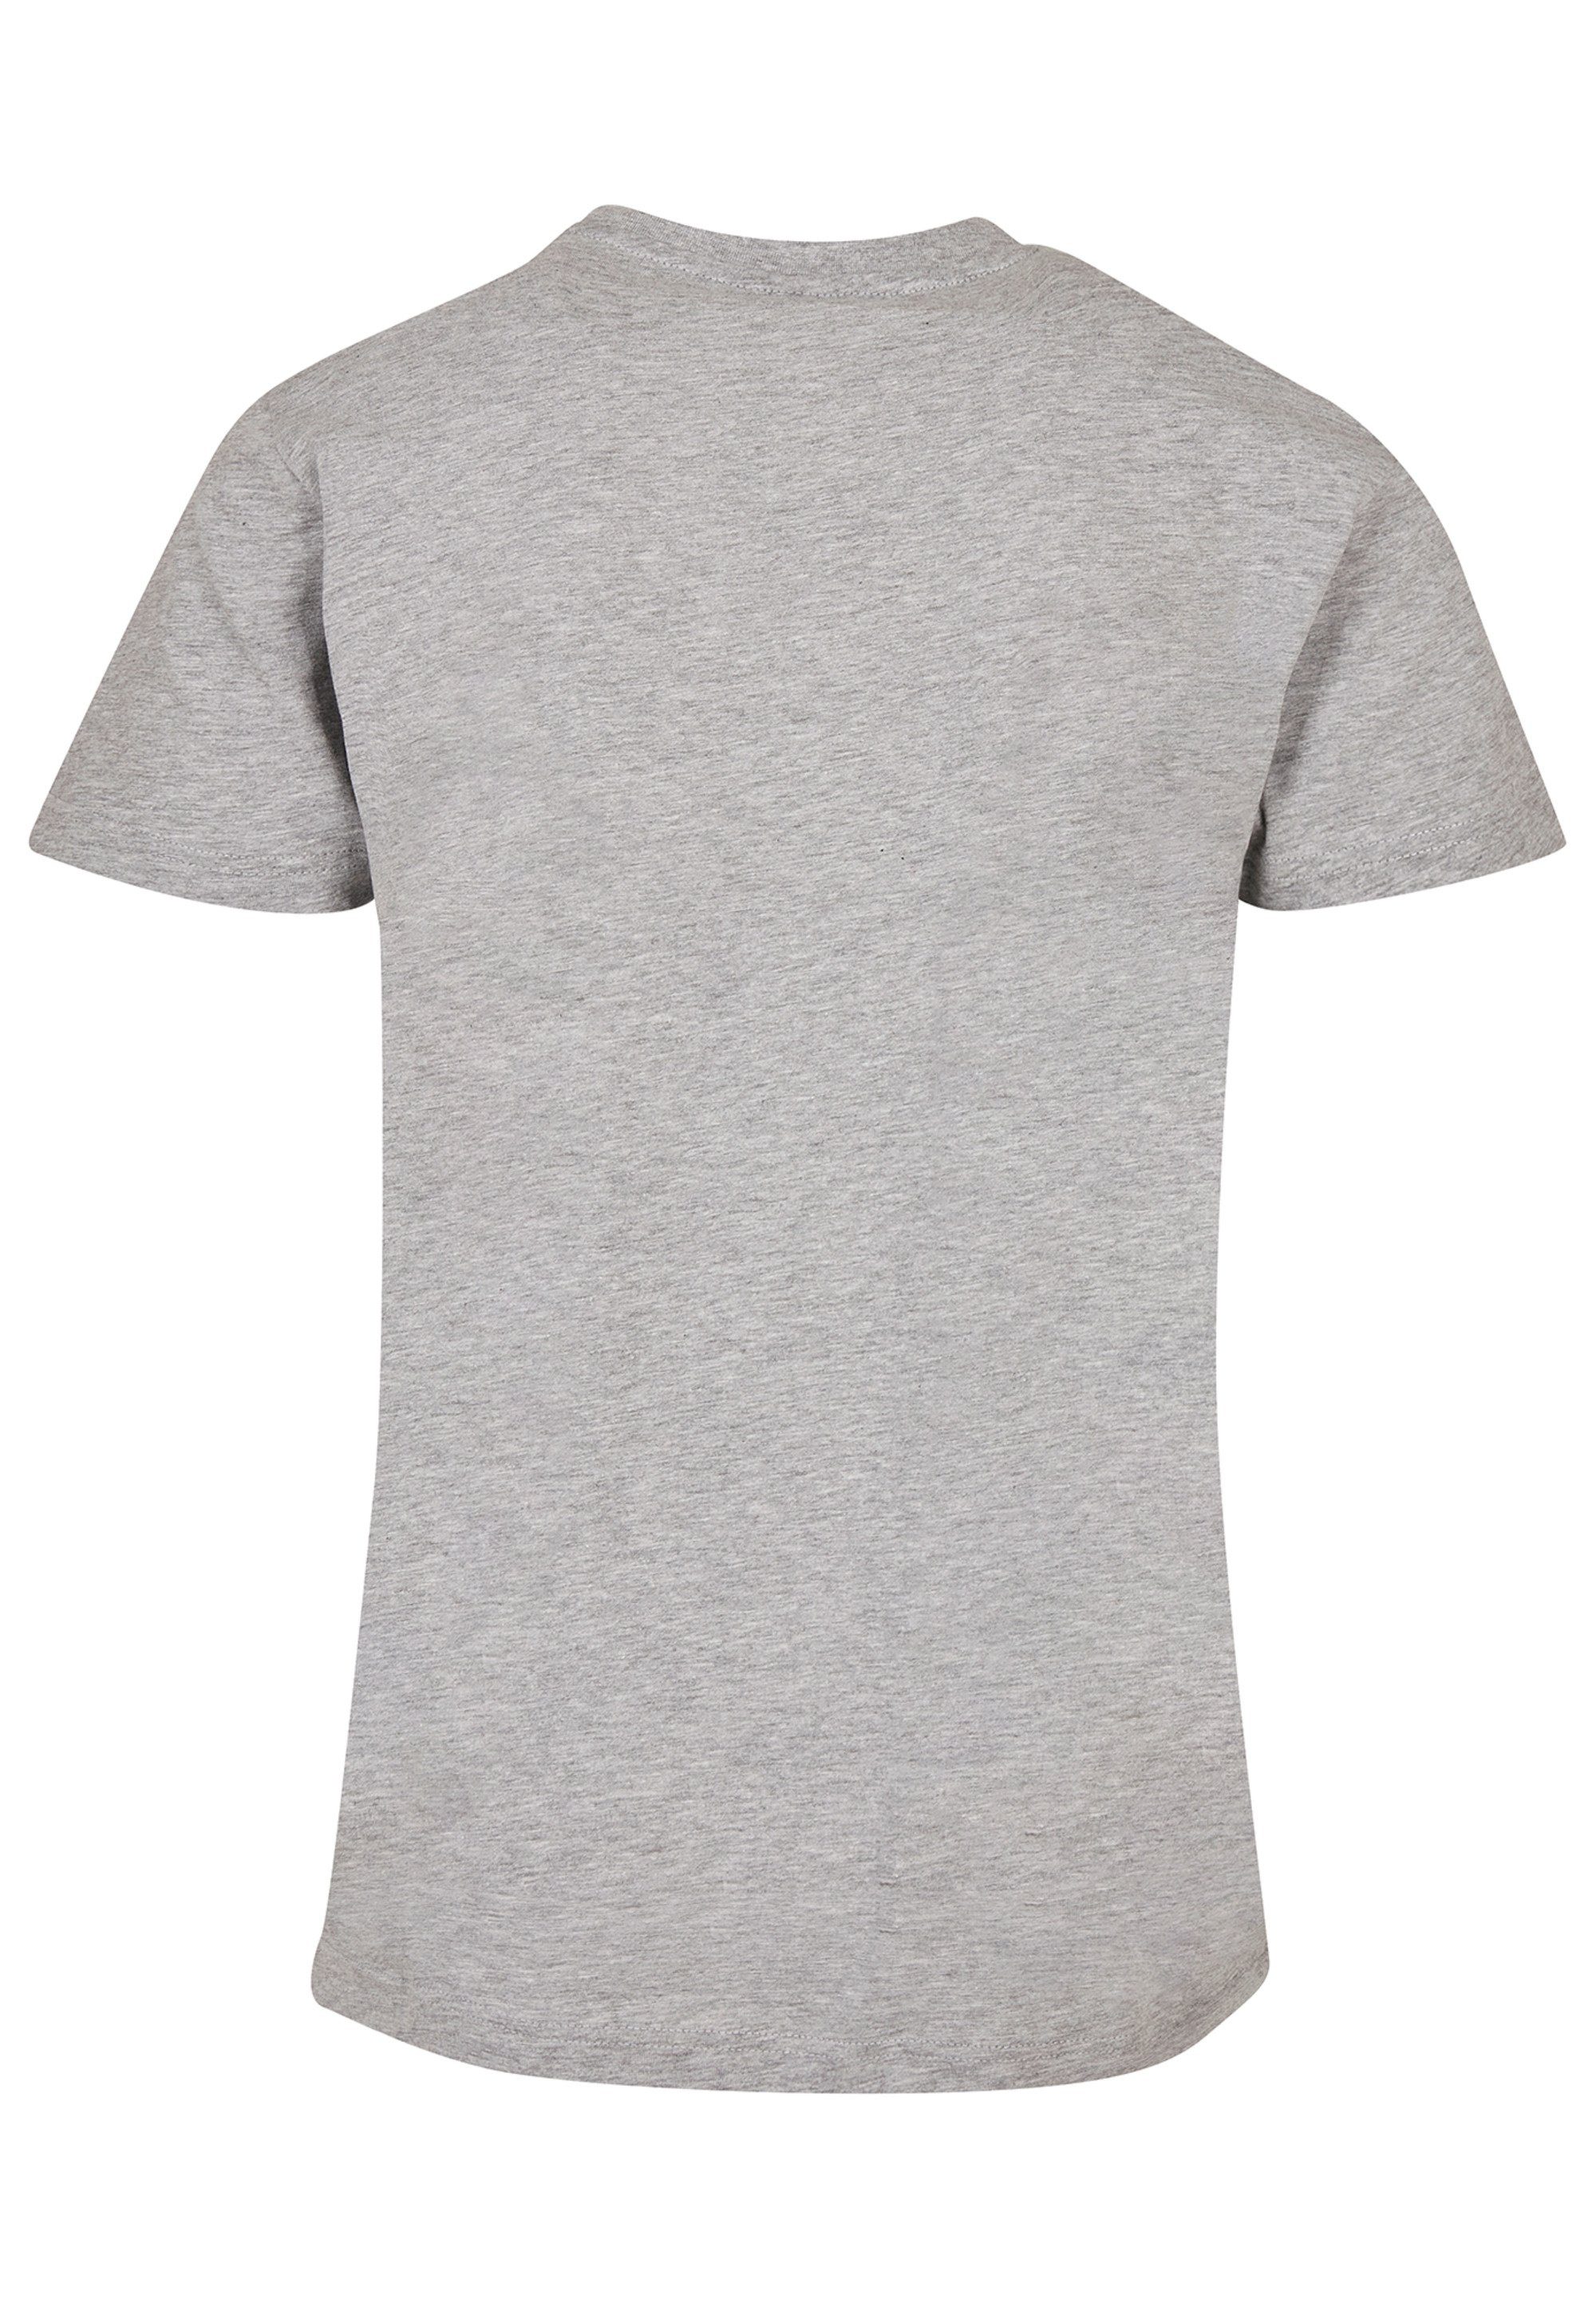 East Village heather Manhatten F4NT4STIC T-Shirt grey Print TEE UNISEX